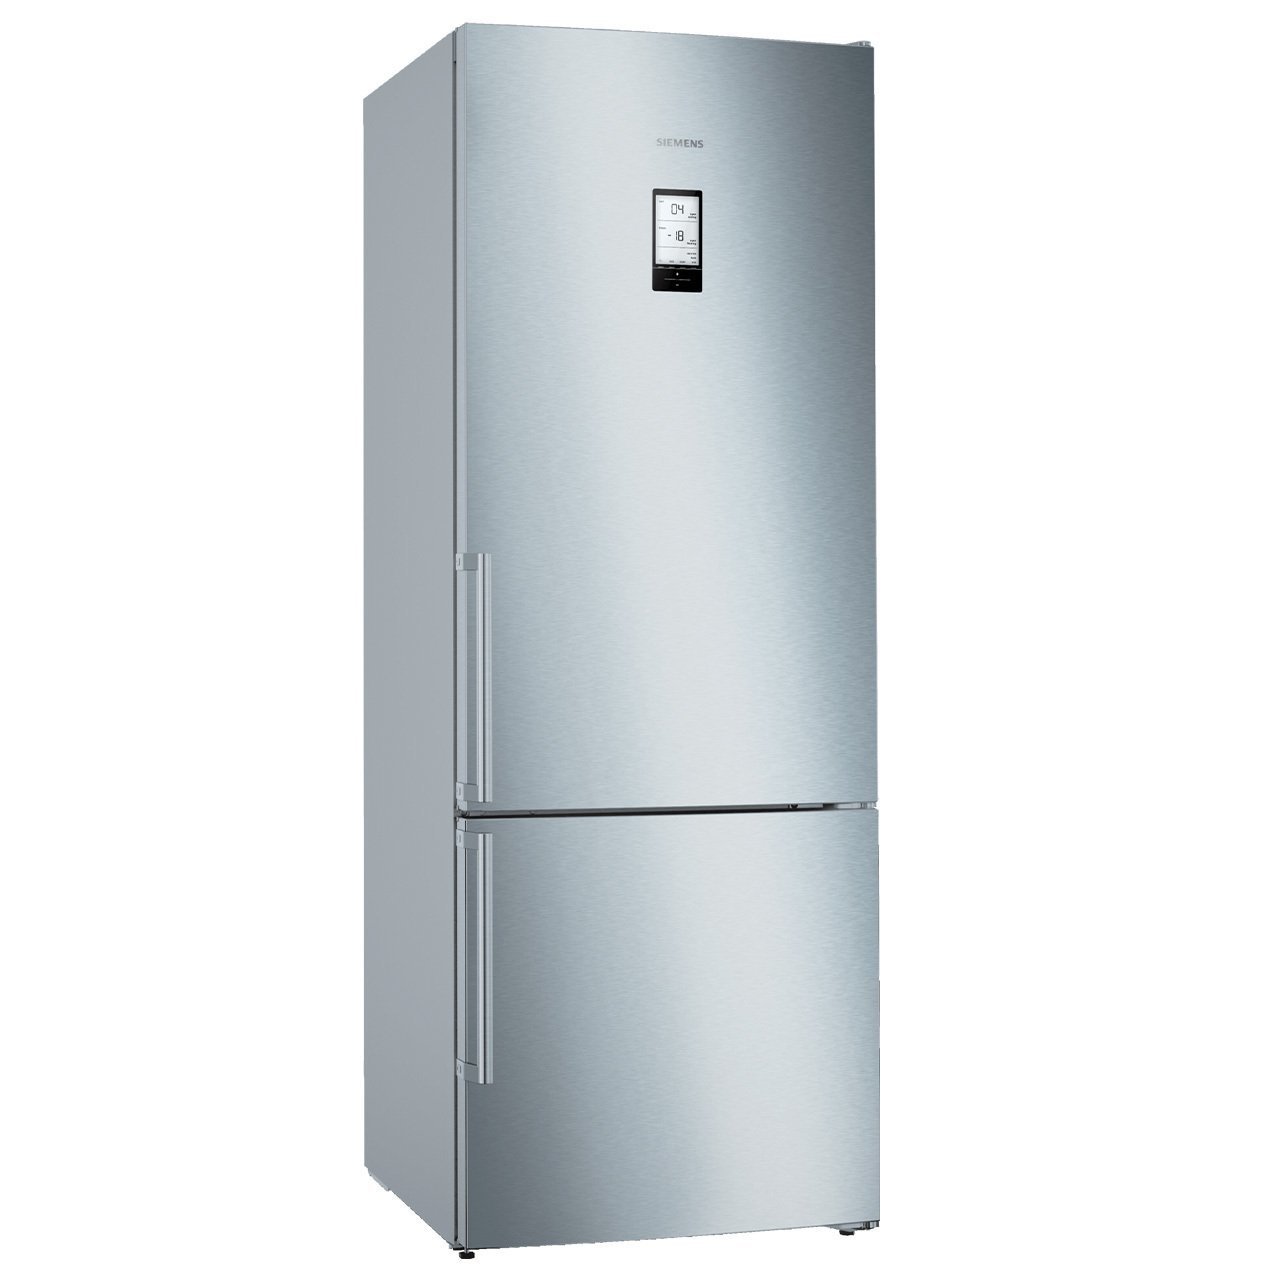 iQ500 Alttan Donduruculu Buzdolabı 193 x 70 cm Kolay temizlenebilir Inox KG56NAIE0N